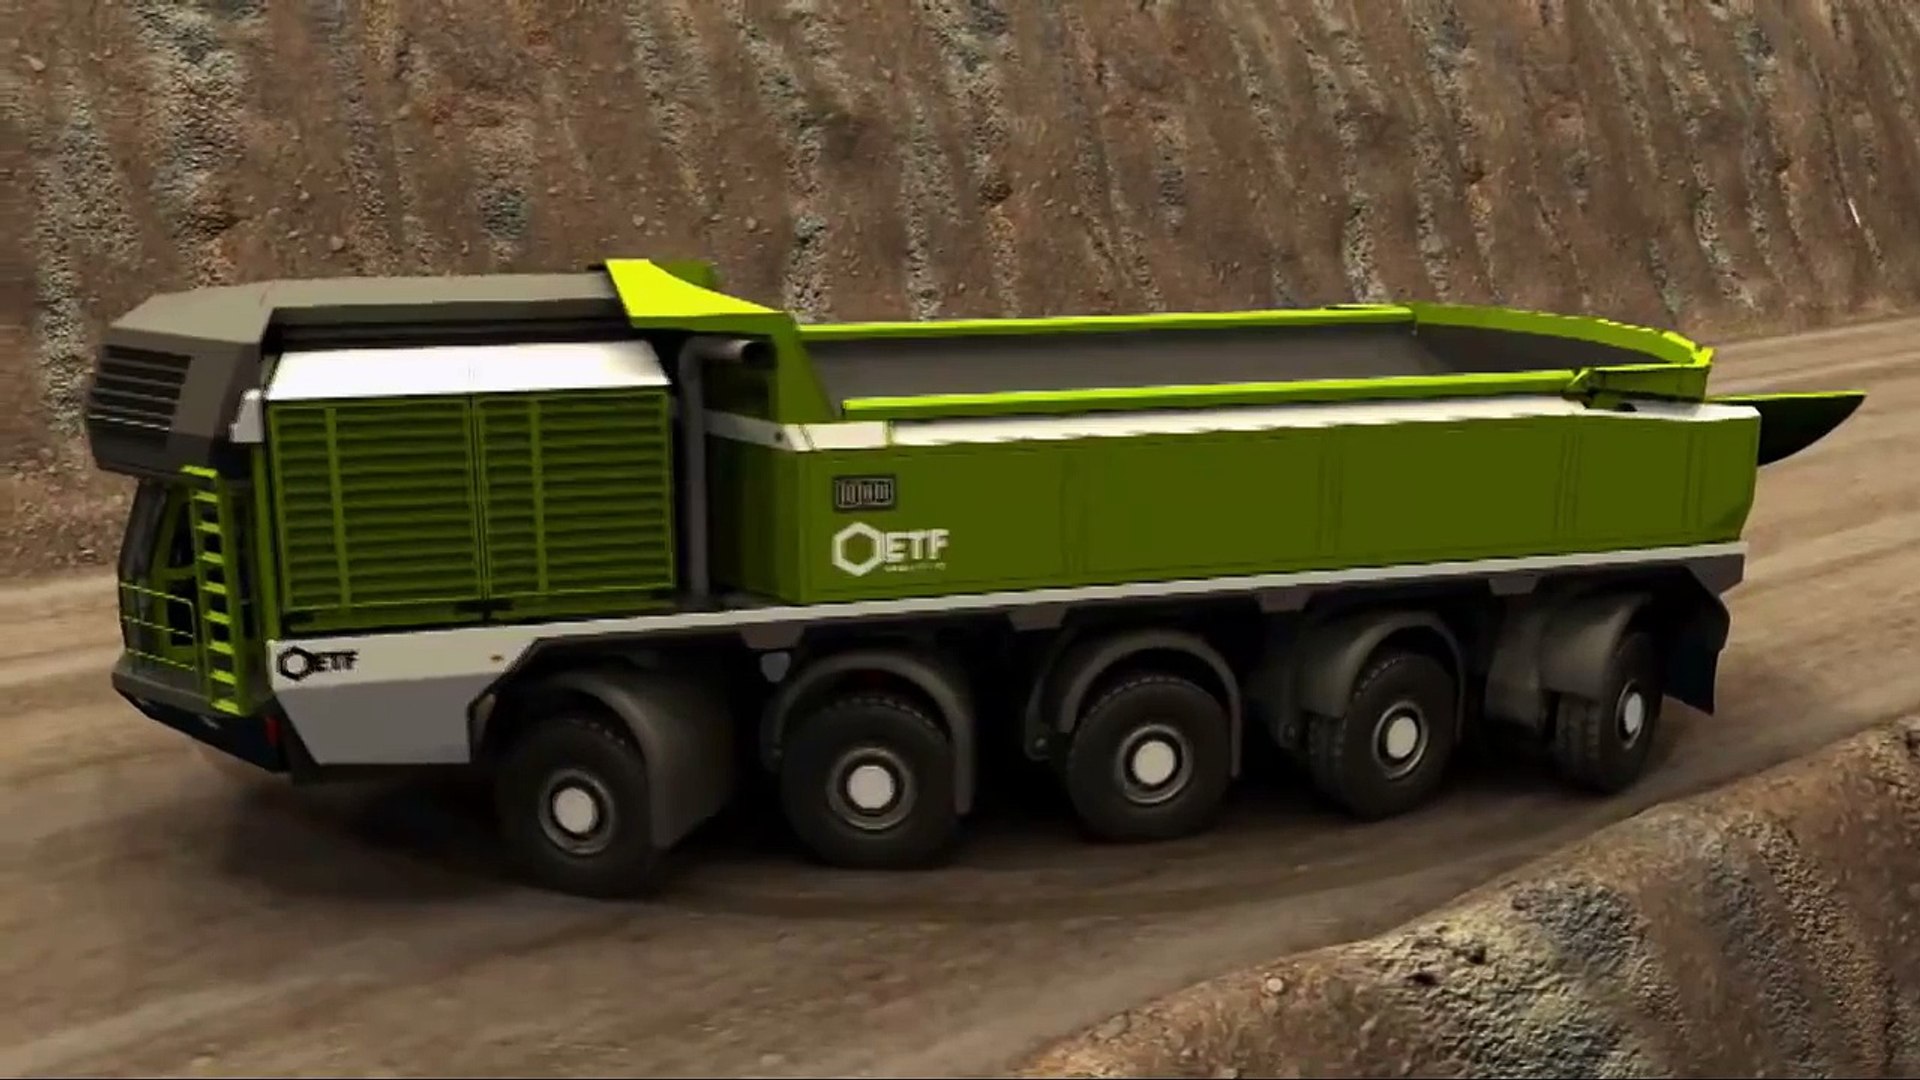 Etf Mt-240 Mining Truck Wallpapers